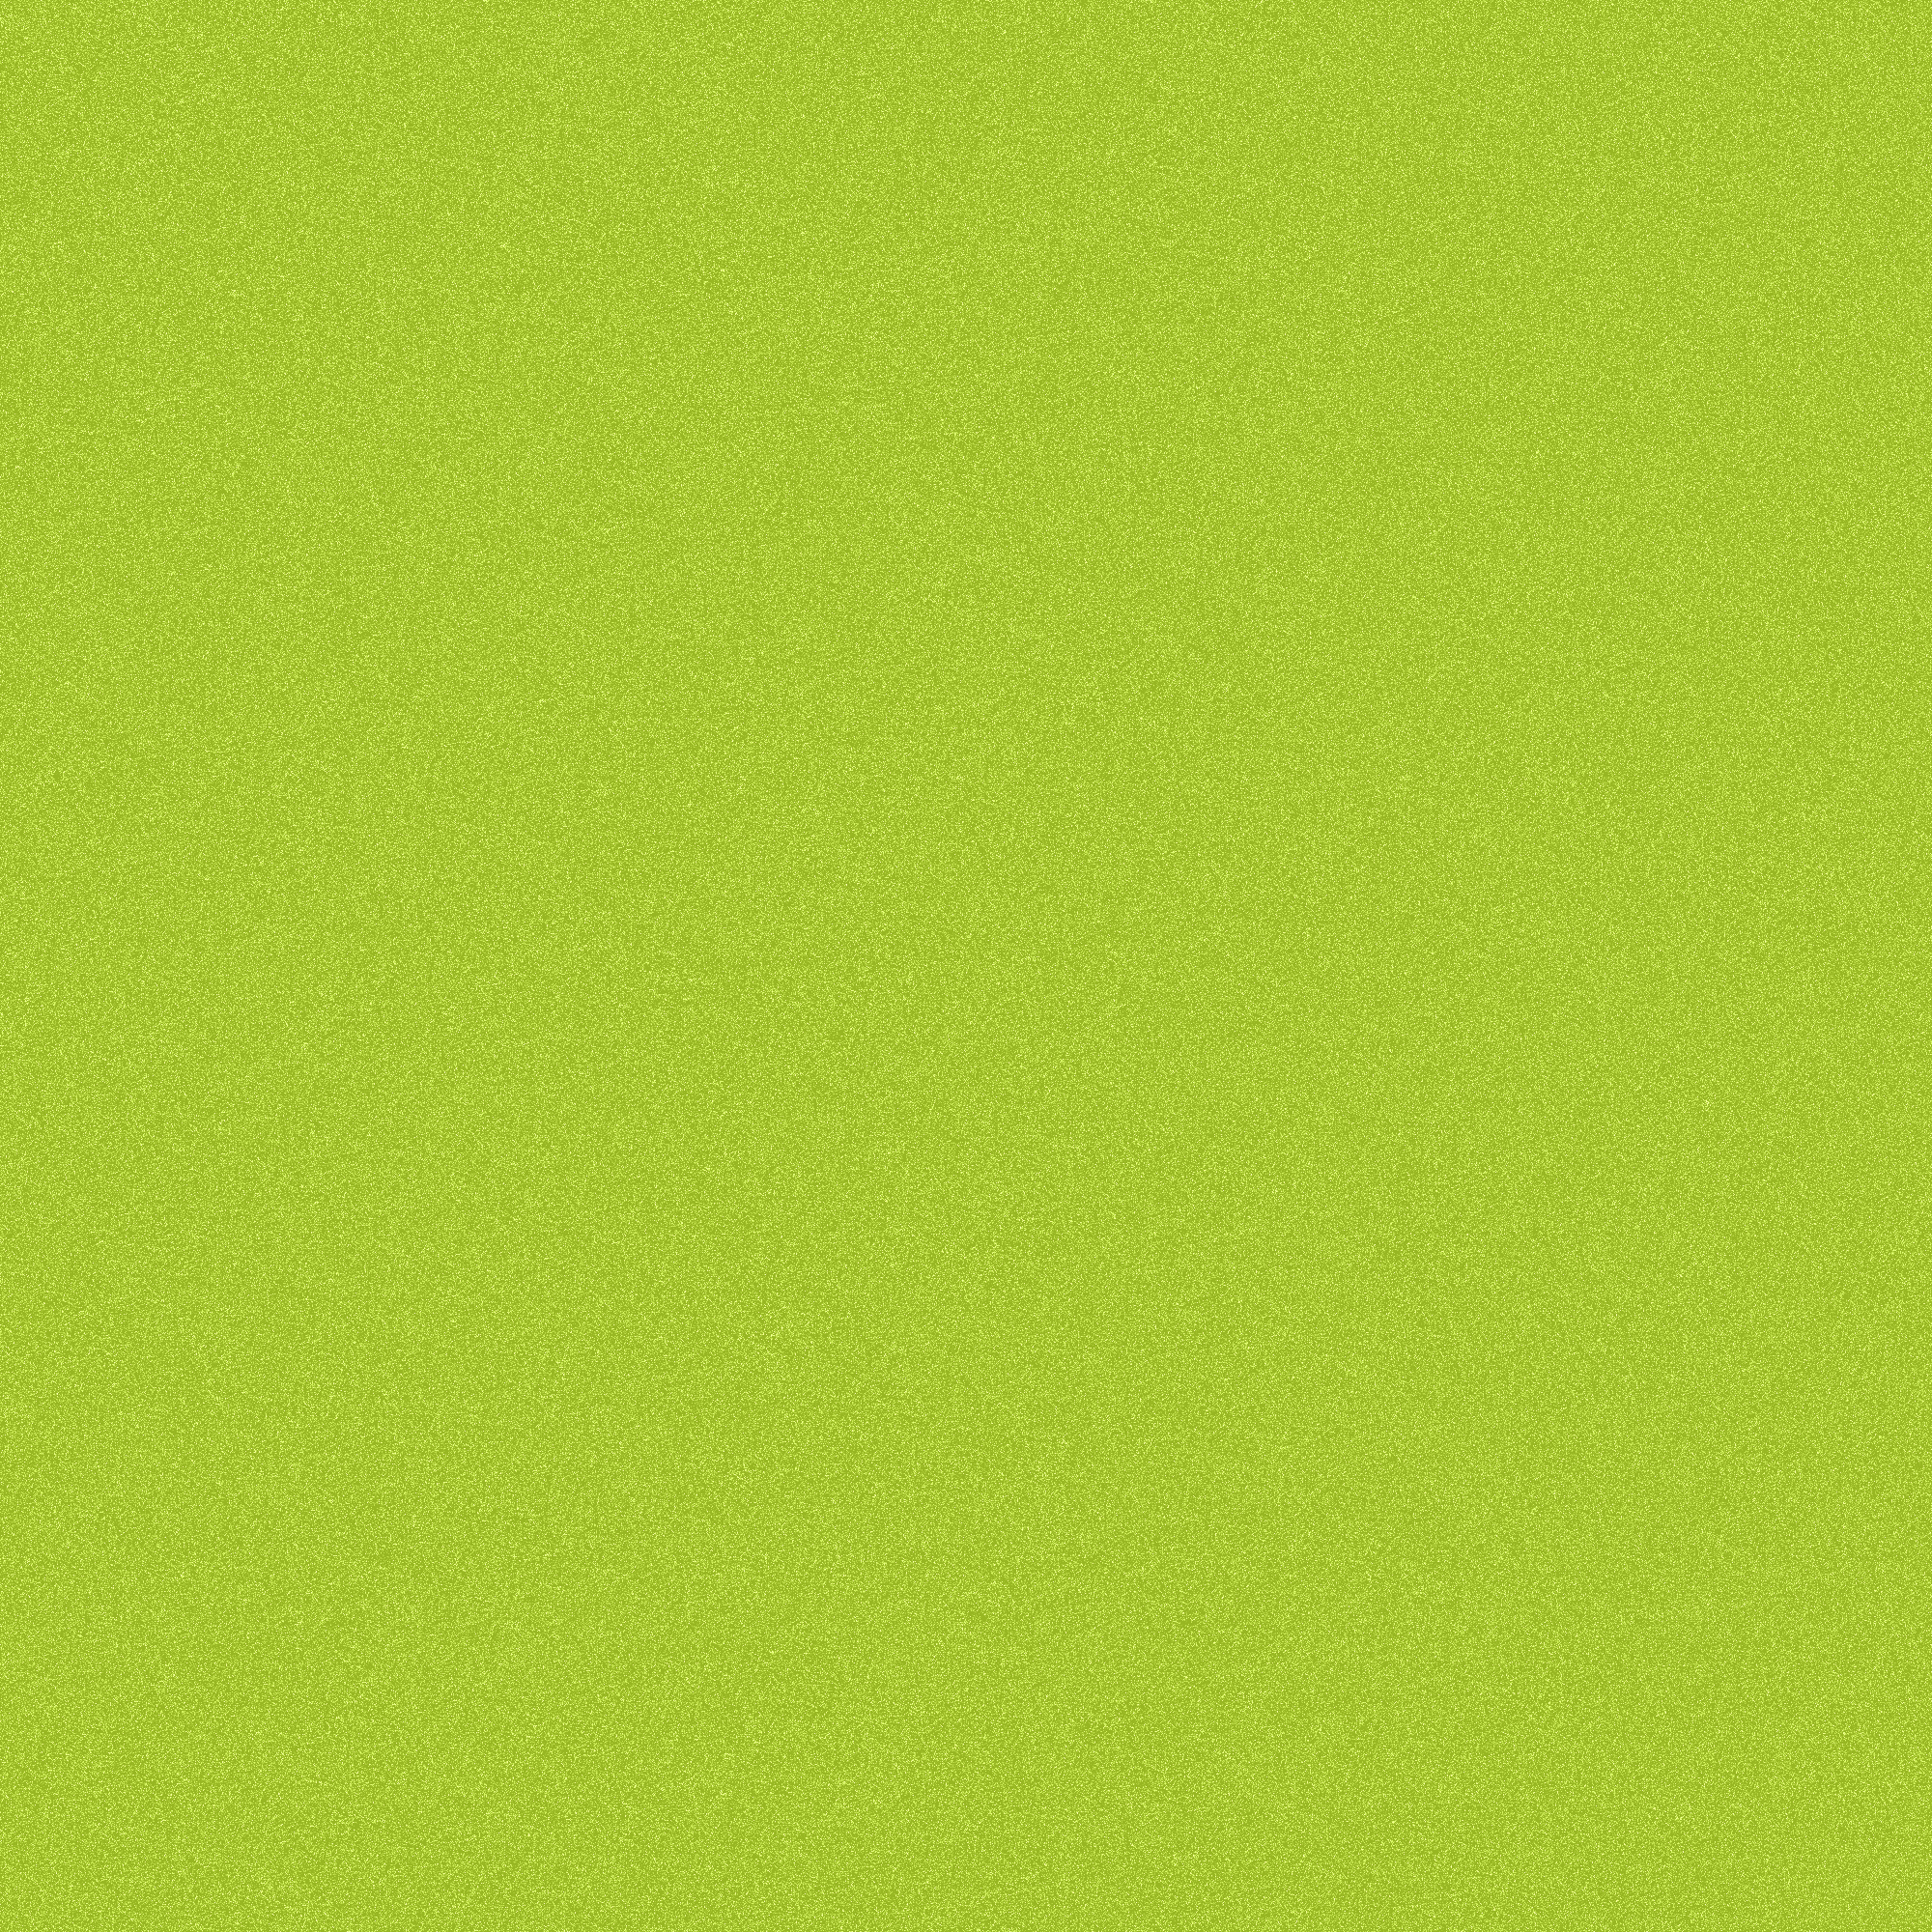 Light Green Background Design